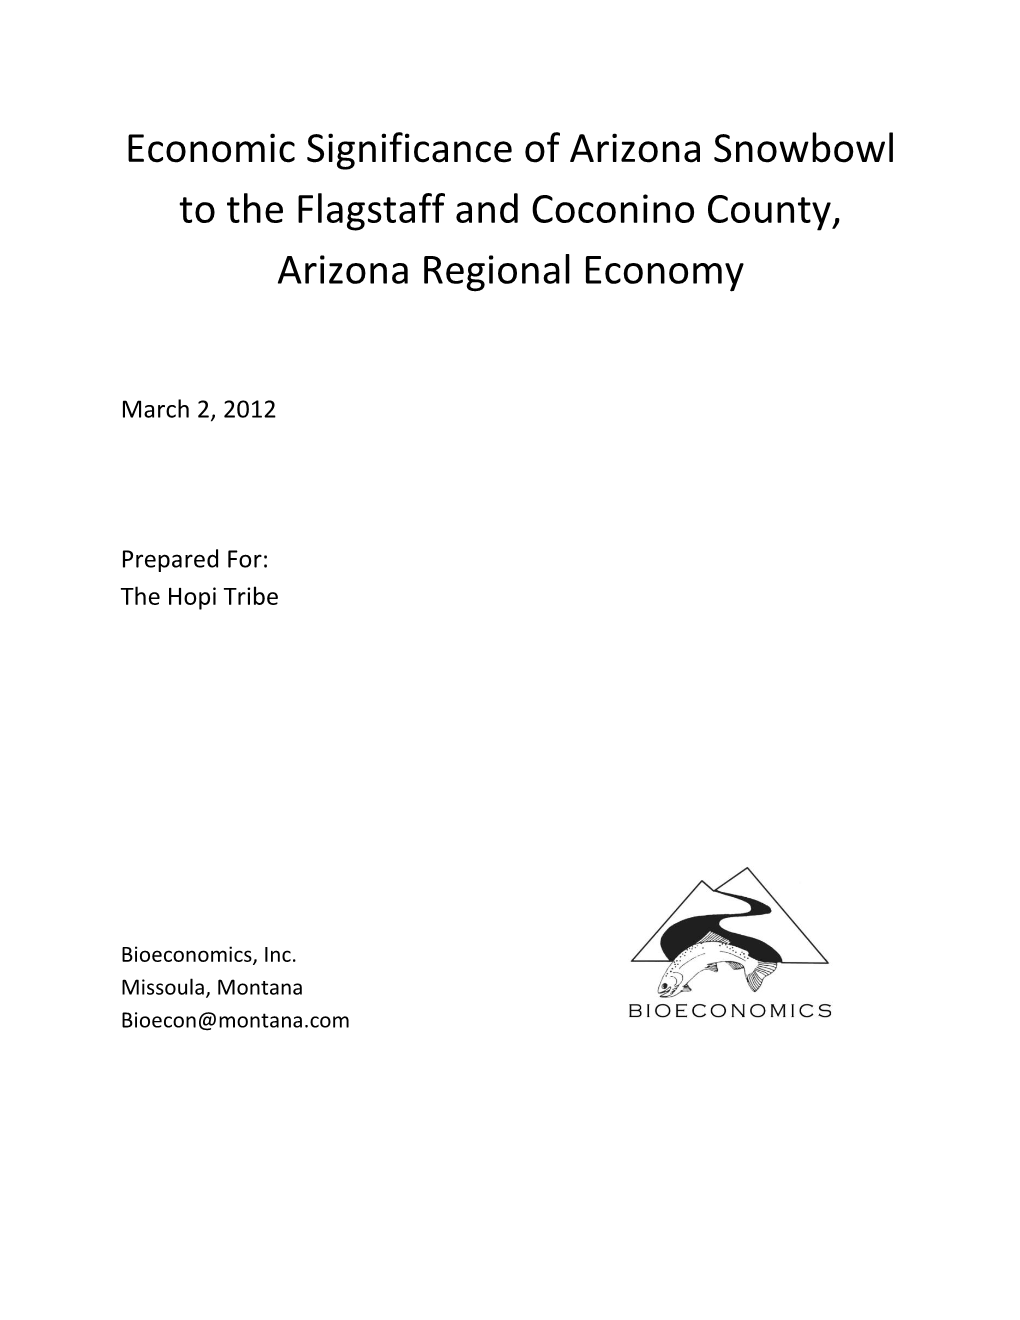 Economic Significance of Arizona Snowbowl to the Flagstaff and Coconino County, Arizona Regional Economy